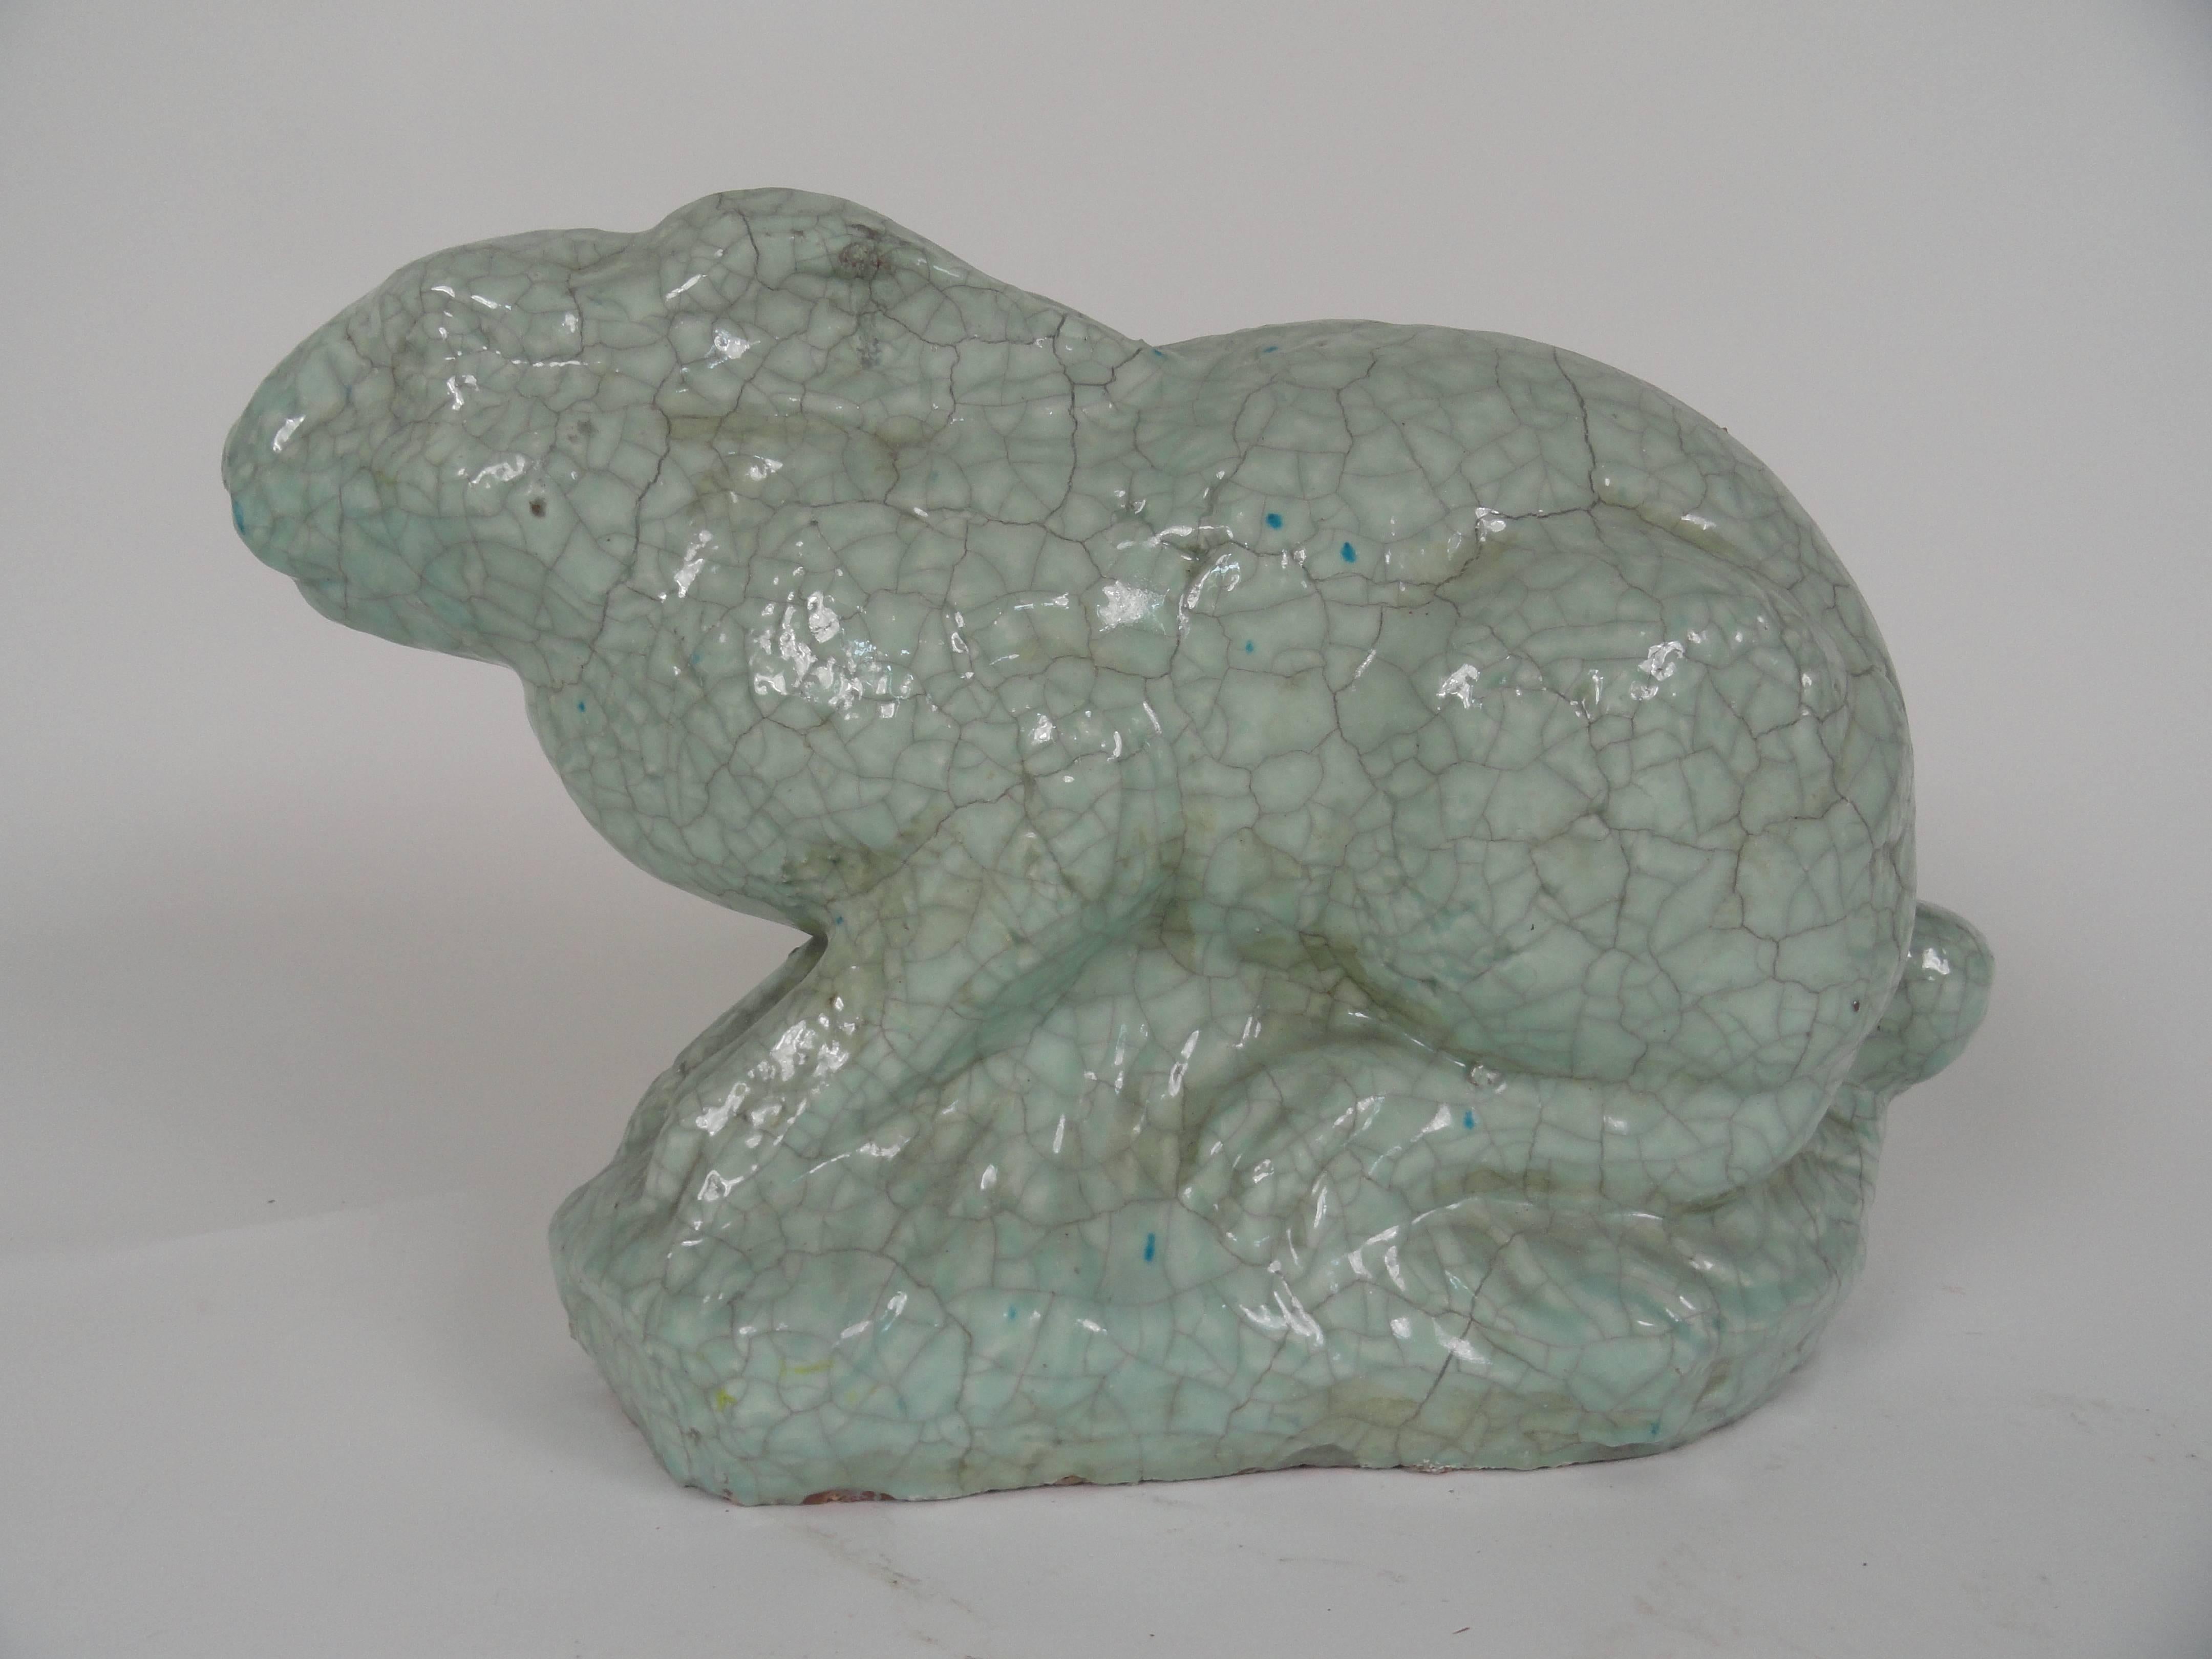 20th century celadon crackle glazed finish rabbit sculpture, large-scale and form. Unique decorative object.